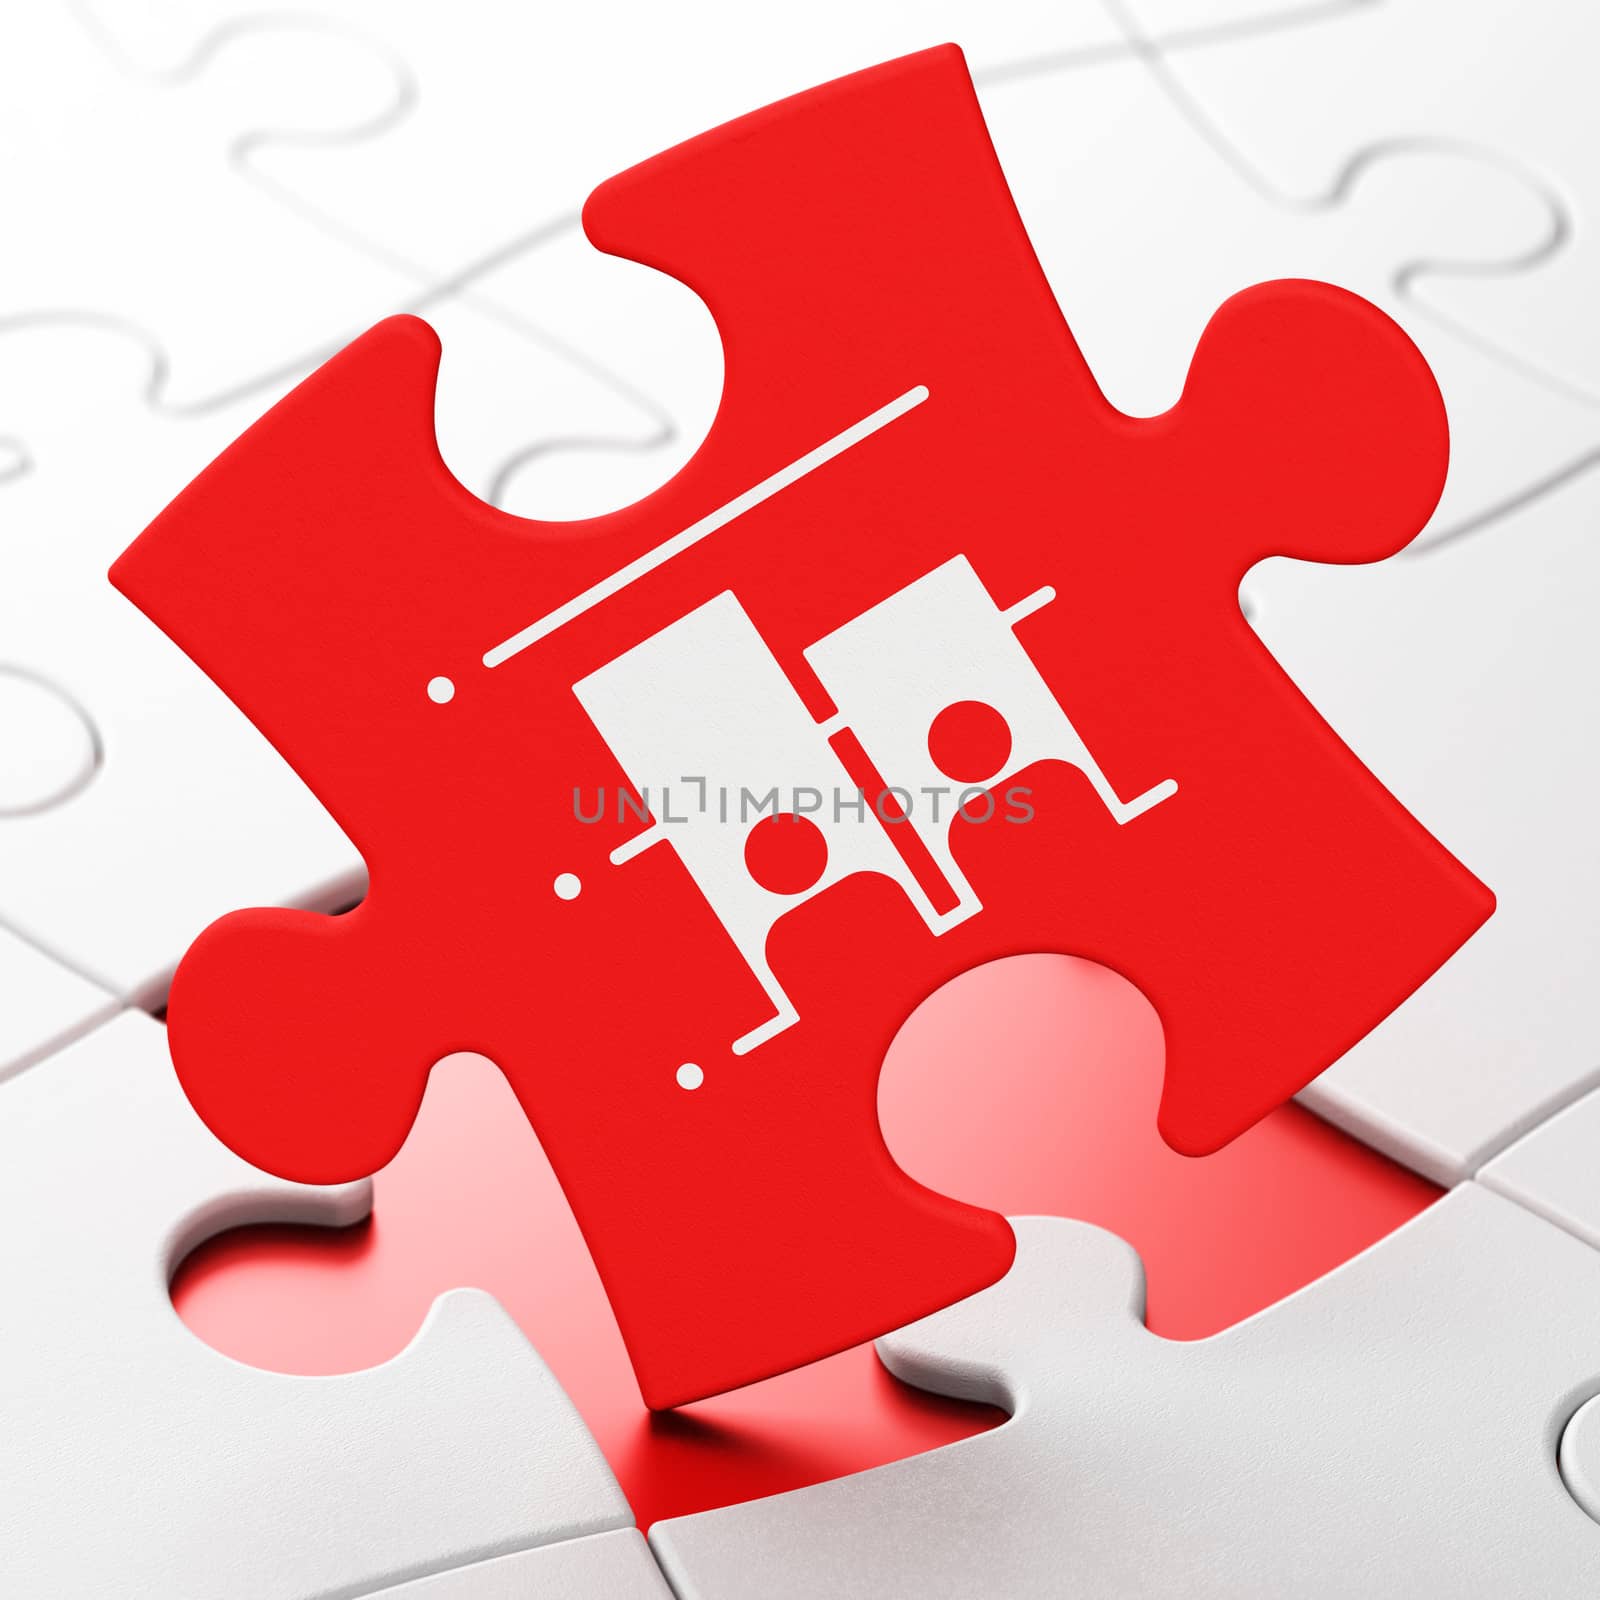 Politics concept: Election on Red puzzle pieces background, 3d render